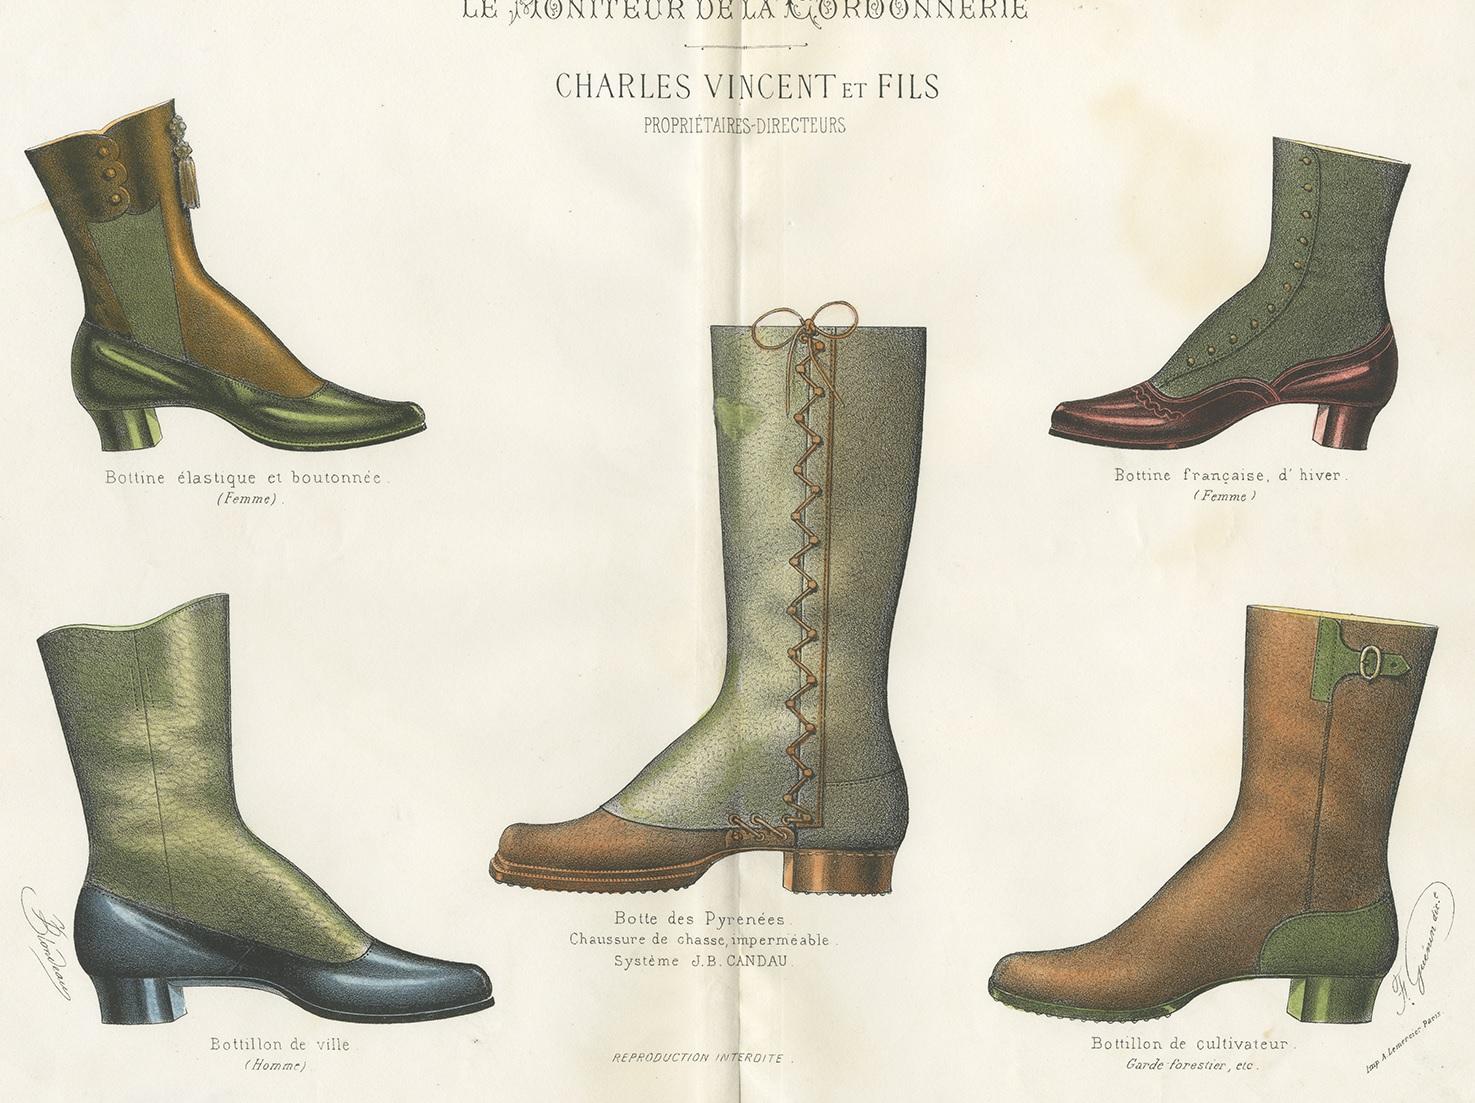 Beautiful hand colored lithograph of various shoe designs. Published in 1887 for 'Le Moniteur de la Cordonnerie', a trade catalogue of Parisian shoe designers/suppliers. Centre fold as issued.